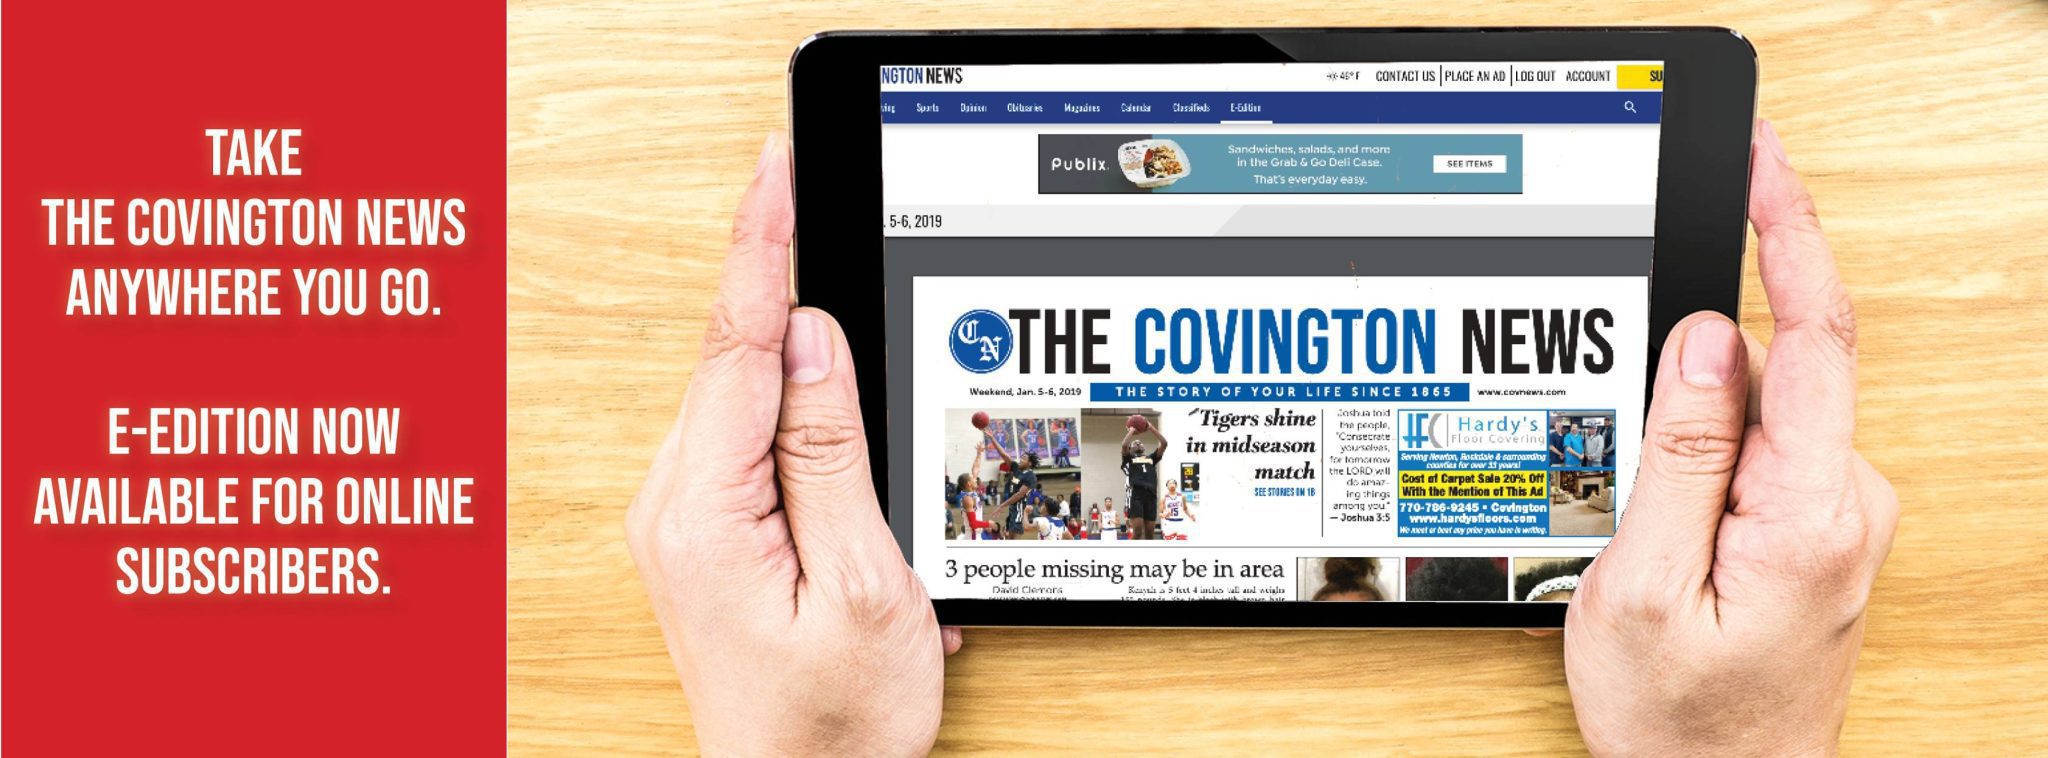 The Covington News